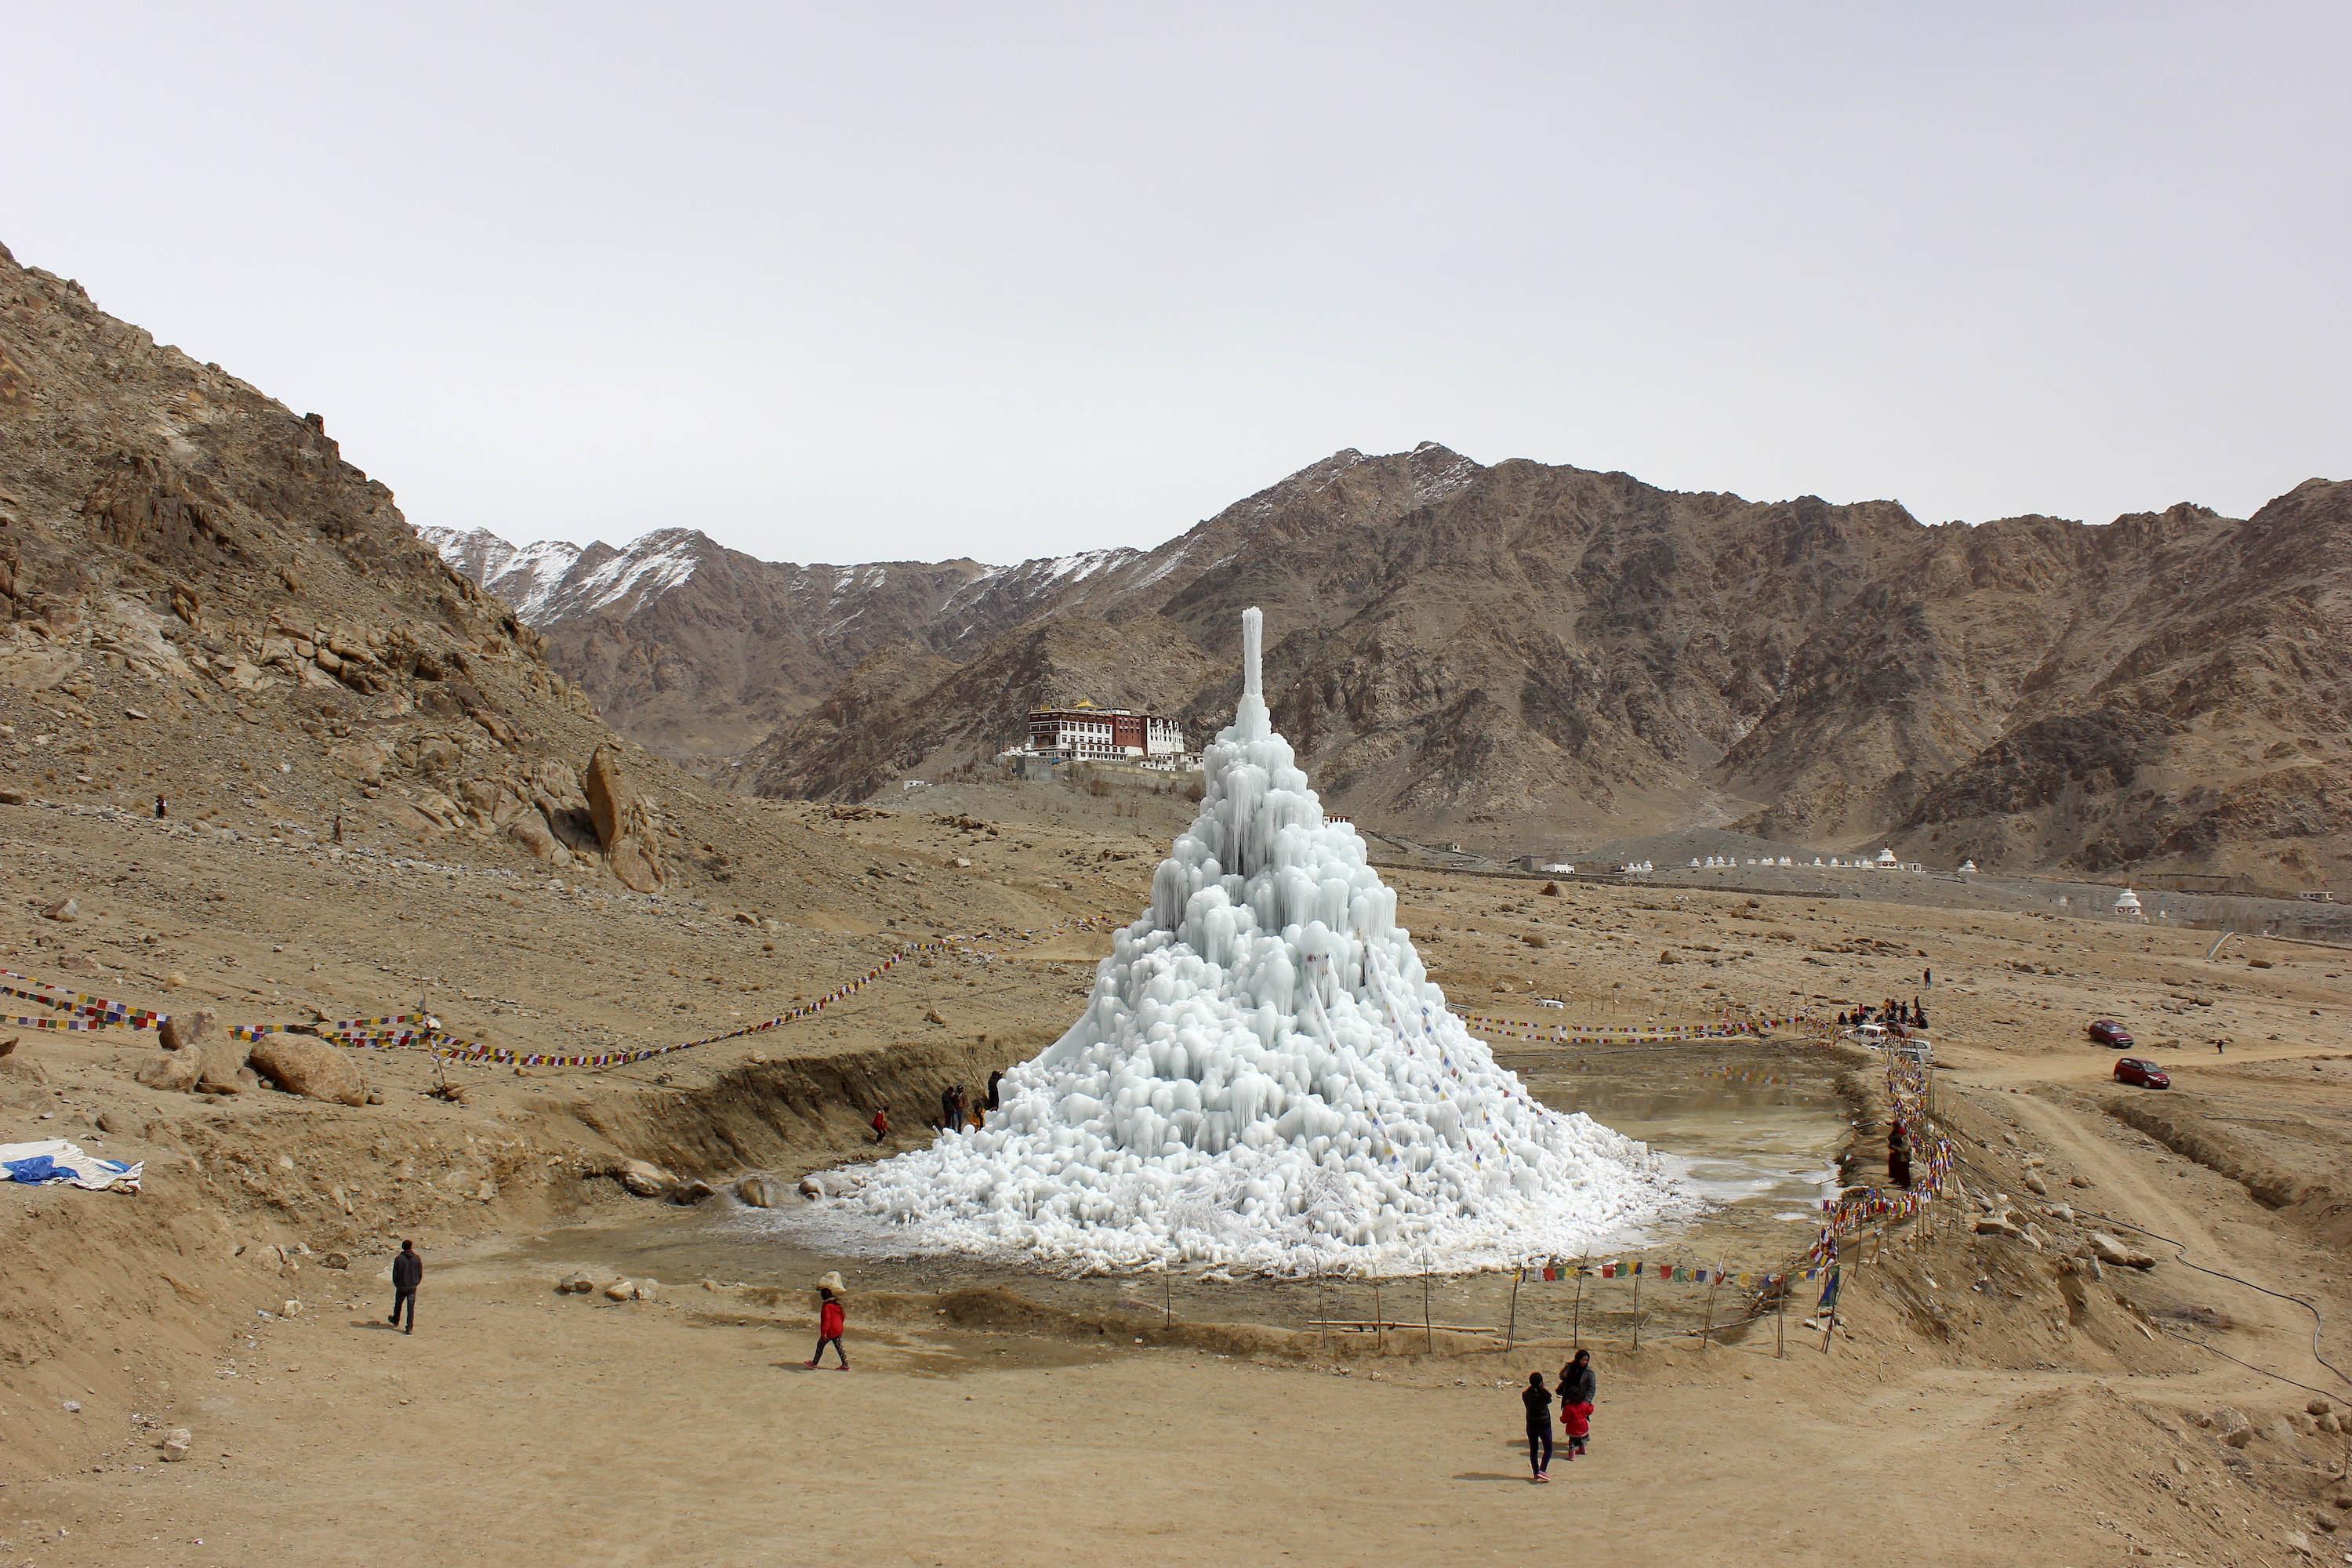 Ice Stupa in Ladakh by Sonam Wangchuk - 2015 Museum of Modern Art in Warsaw